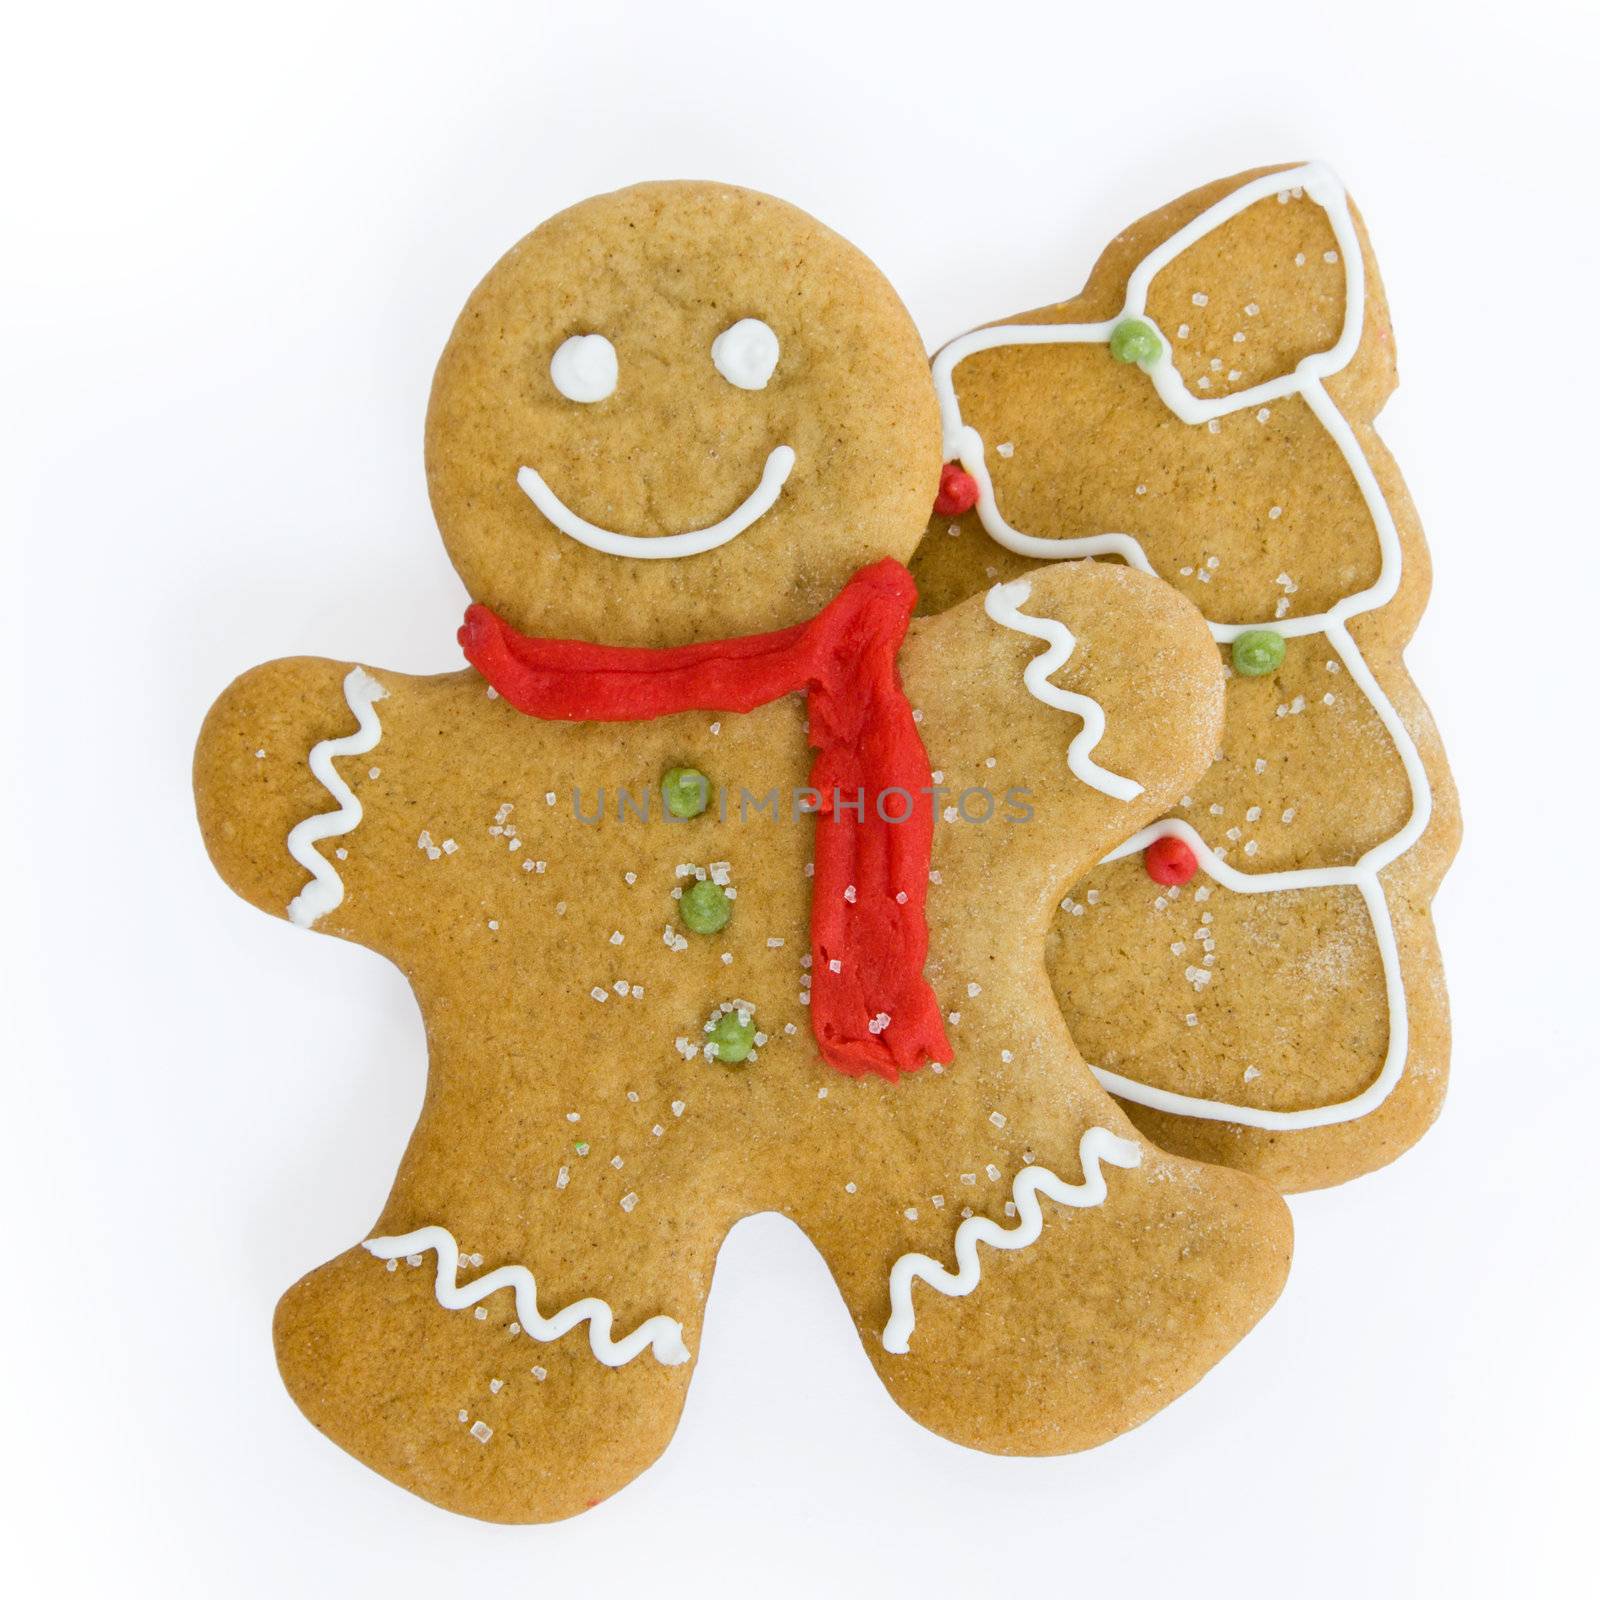 Gingerbread man and Christmas tree by RuthBlack